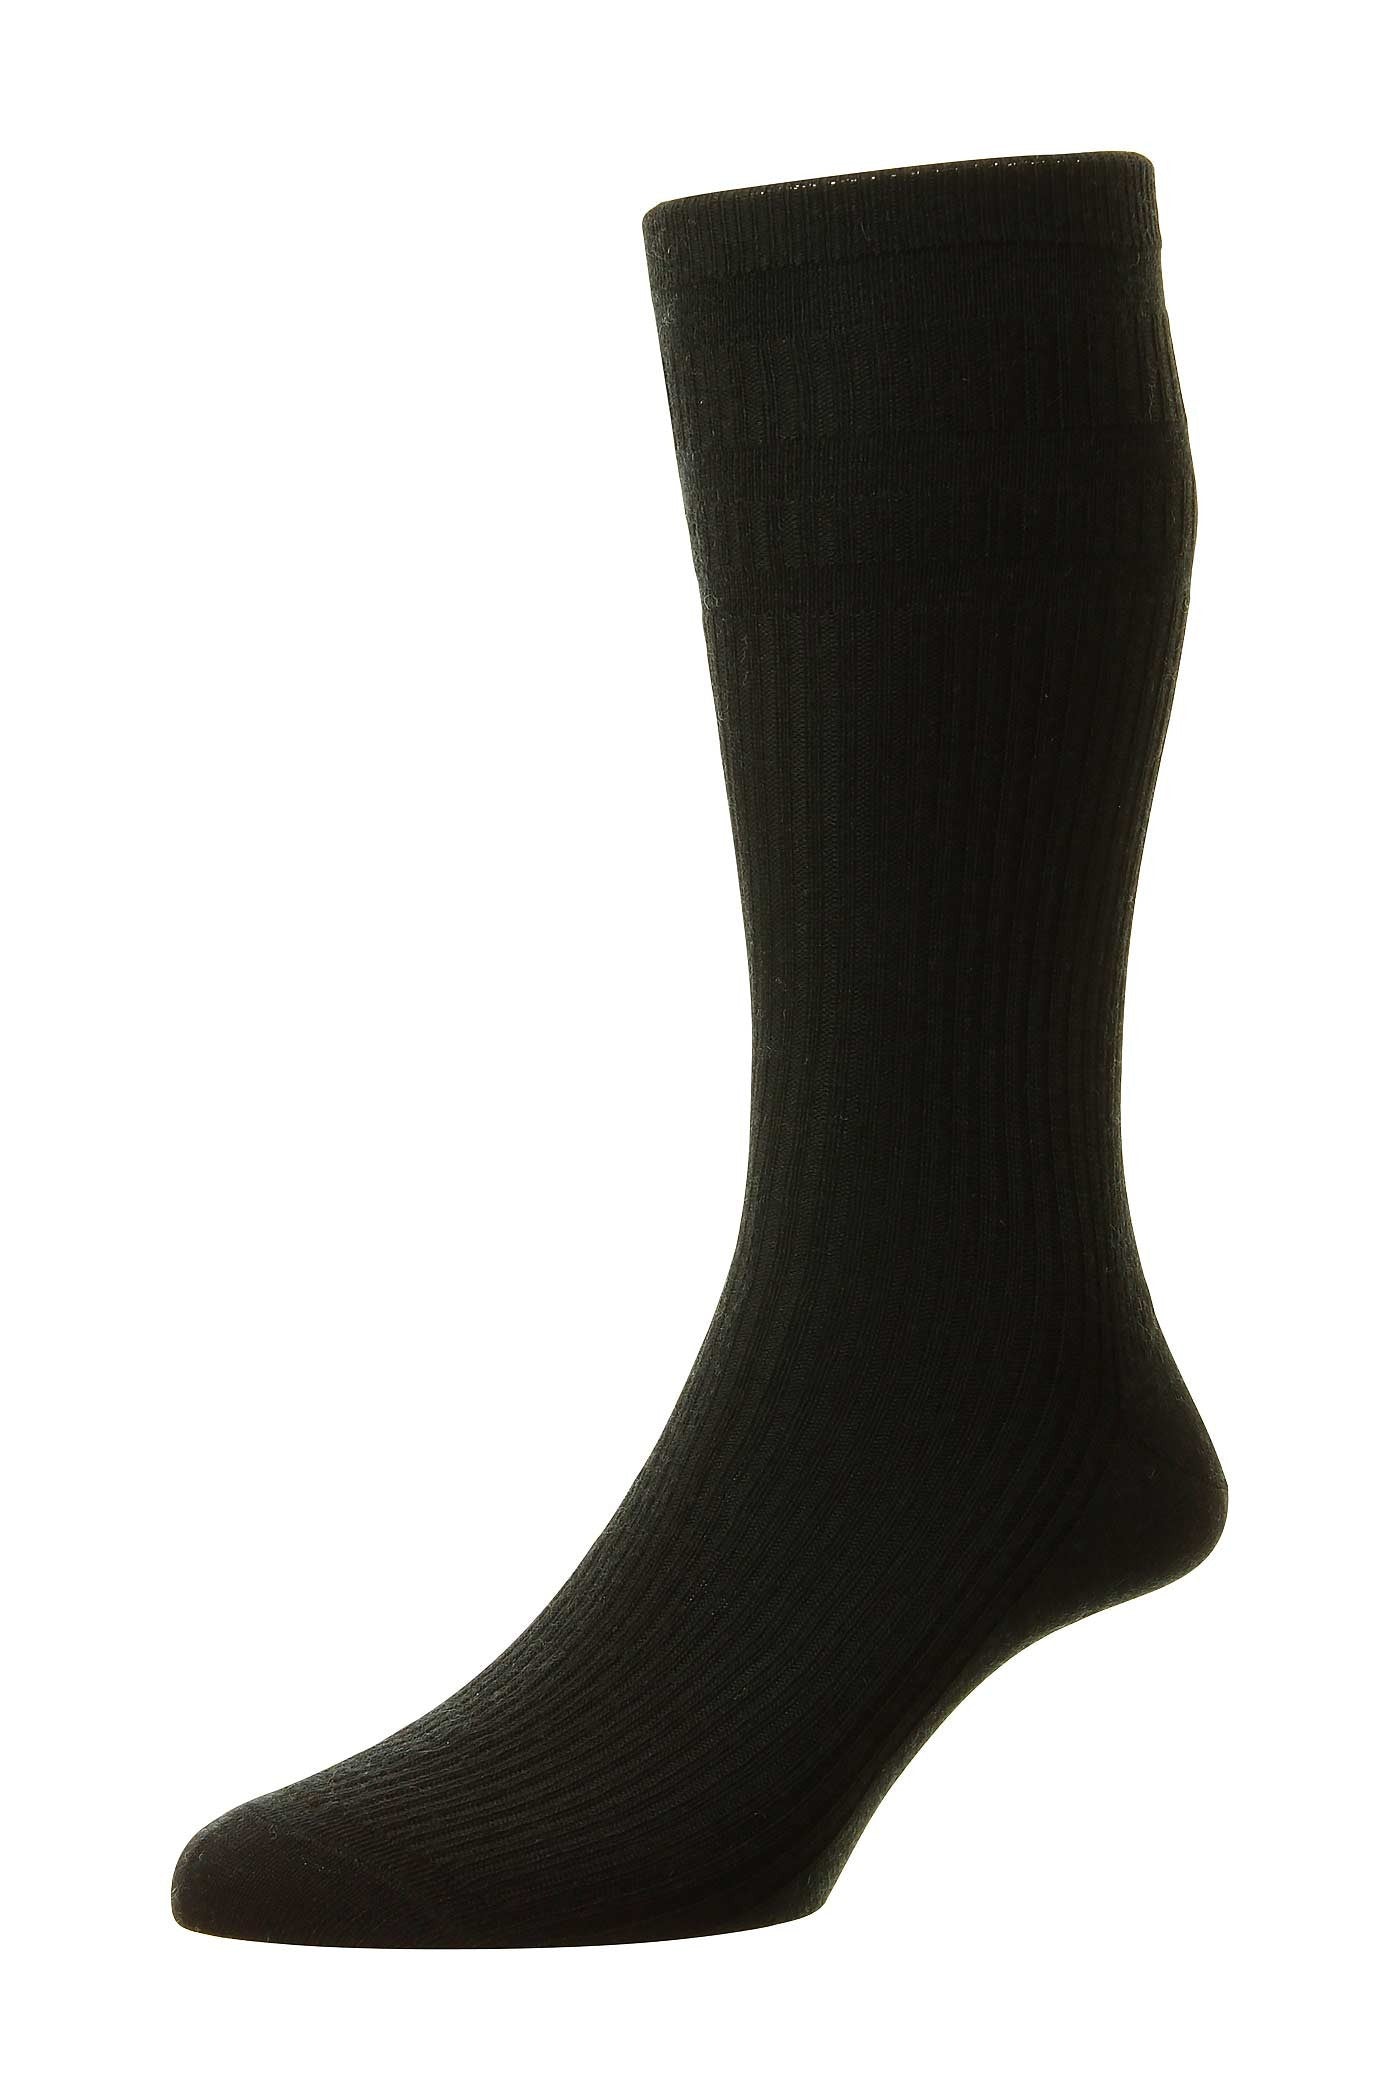 HJ Hall Wool SoftTop Socks Black